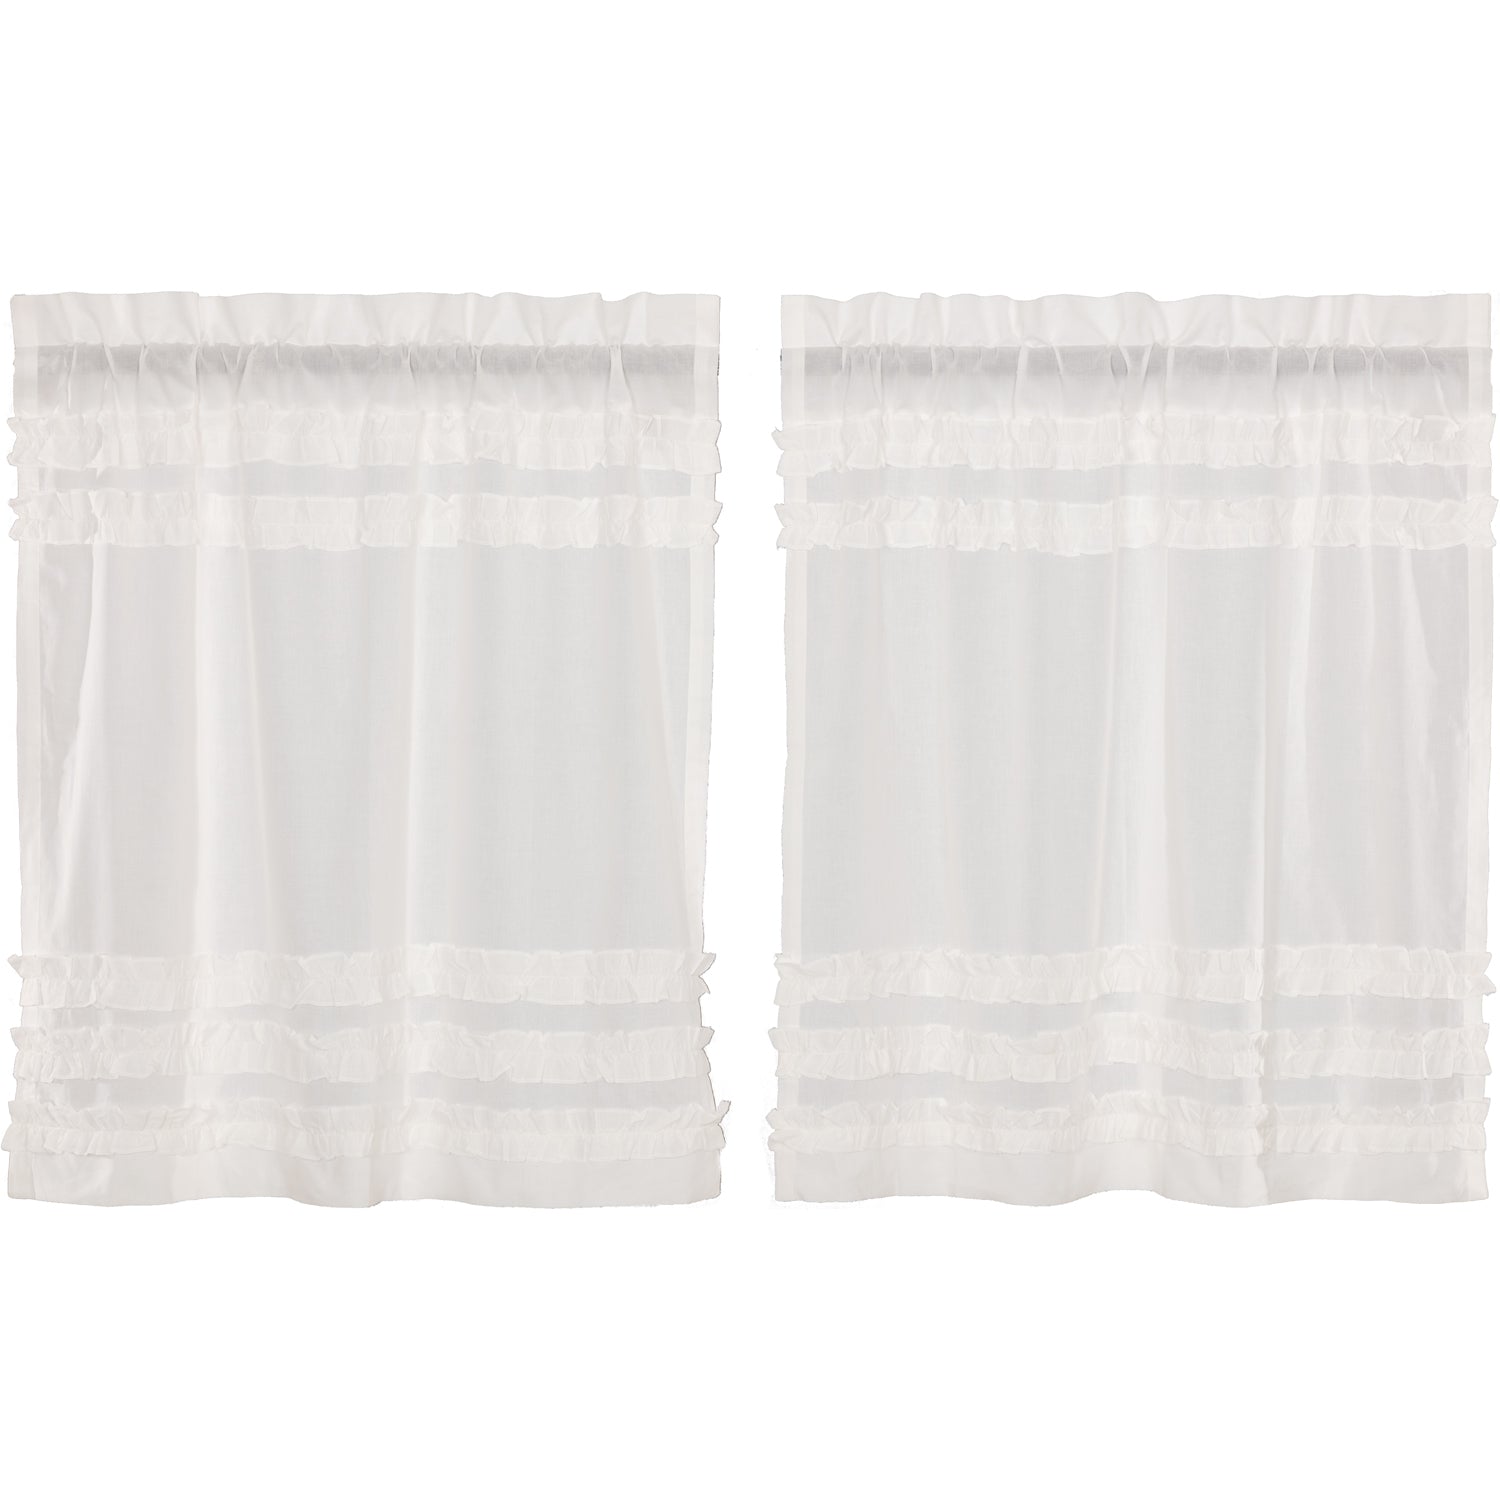 White Ruffled Sheer Petticoat Tier Set of 2 L36xW36